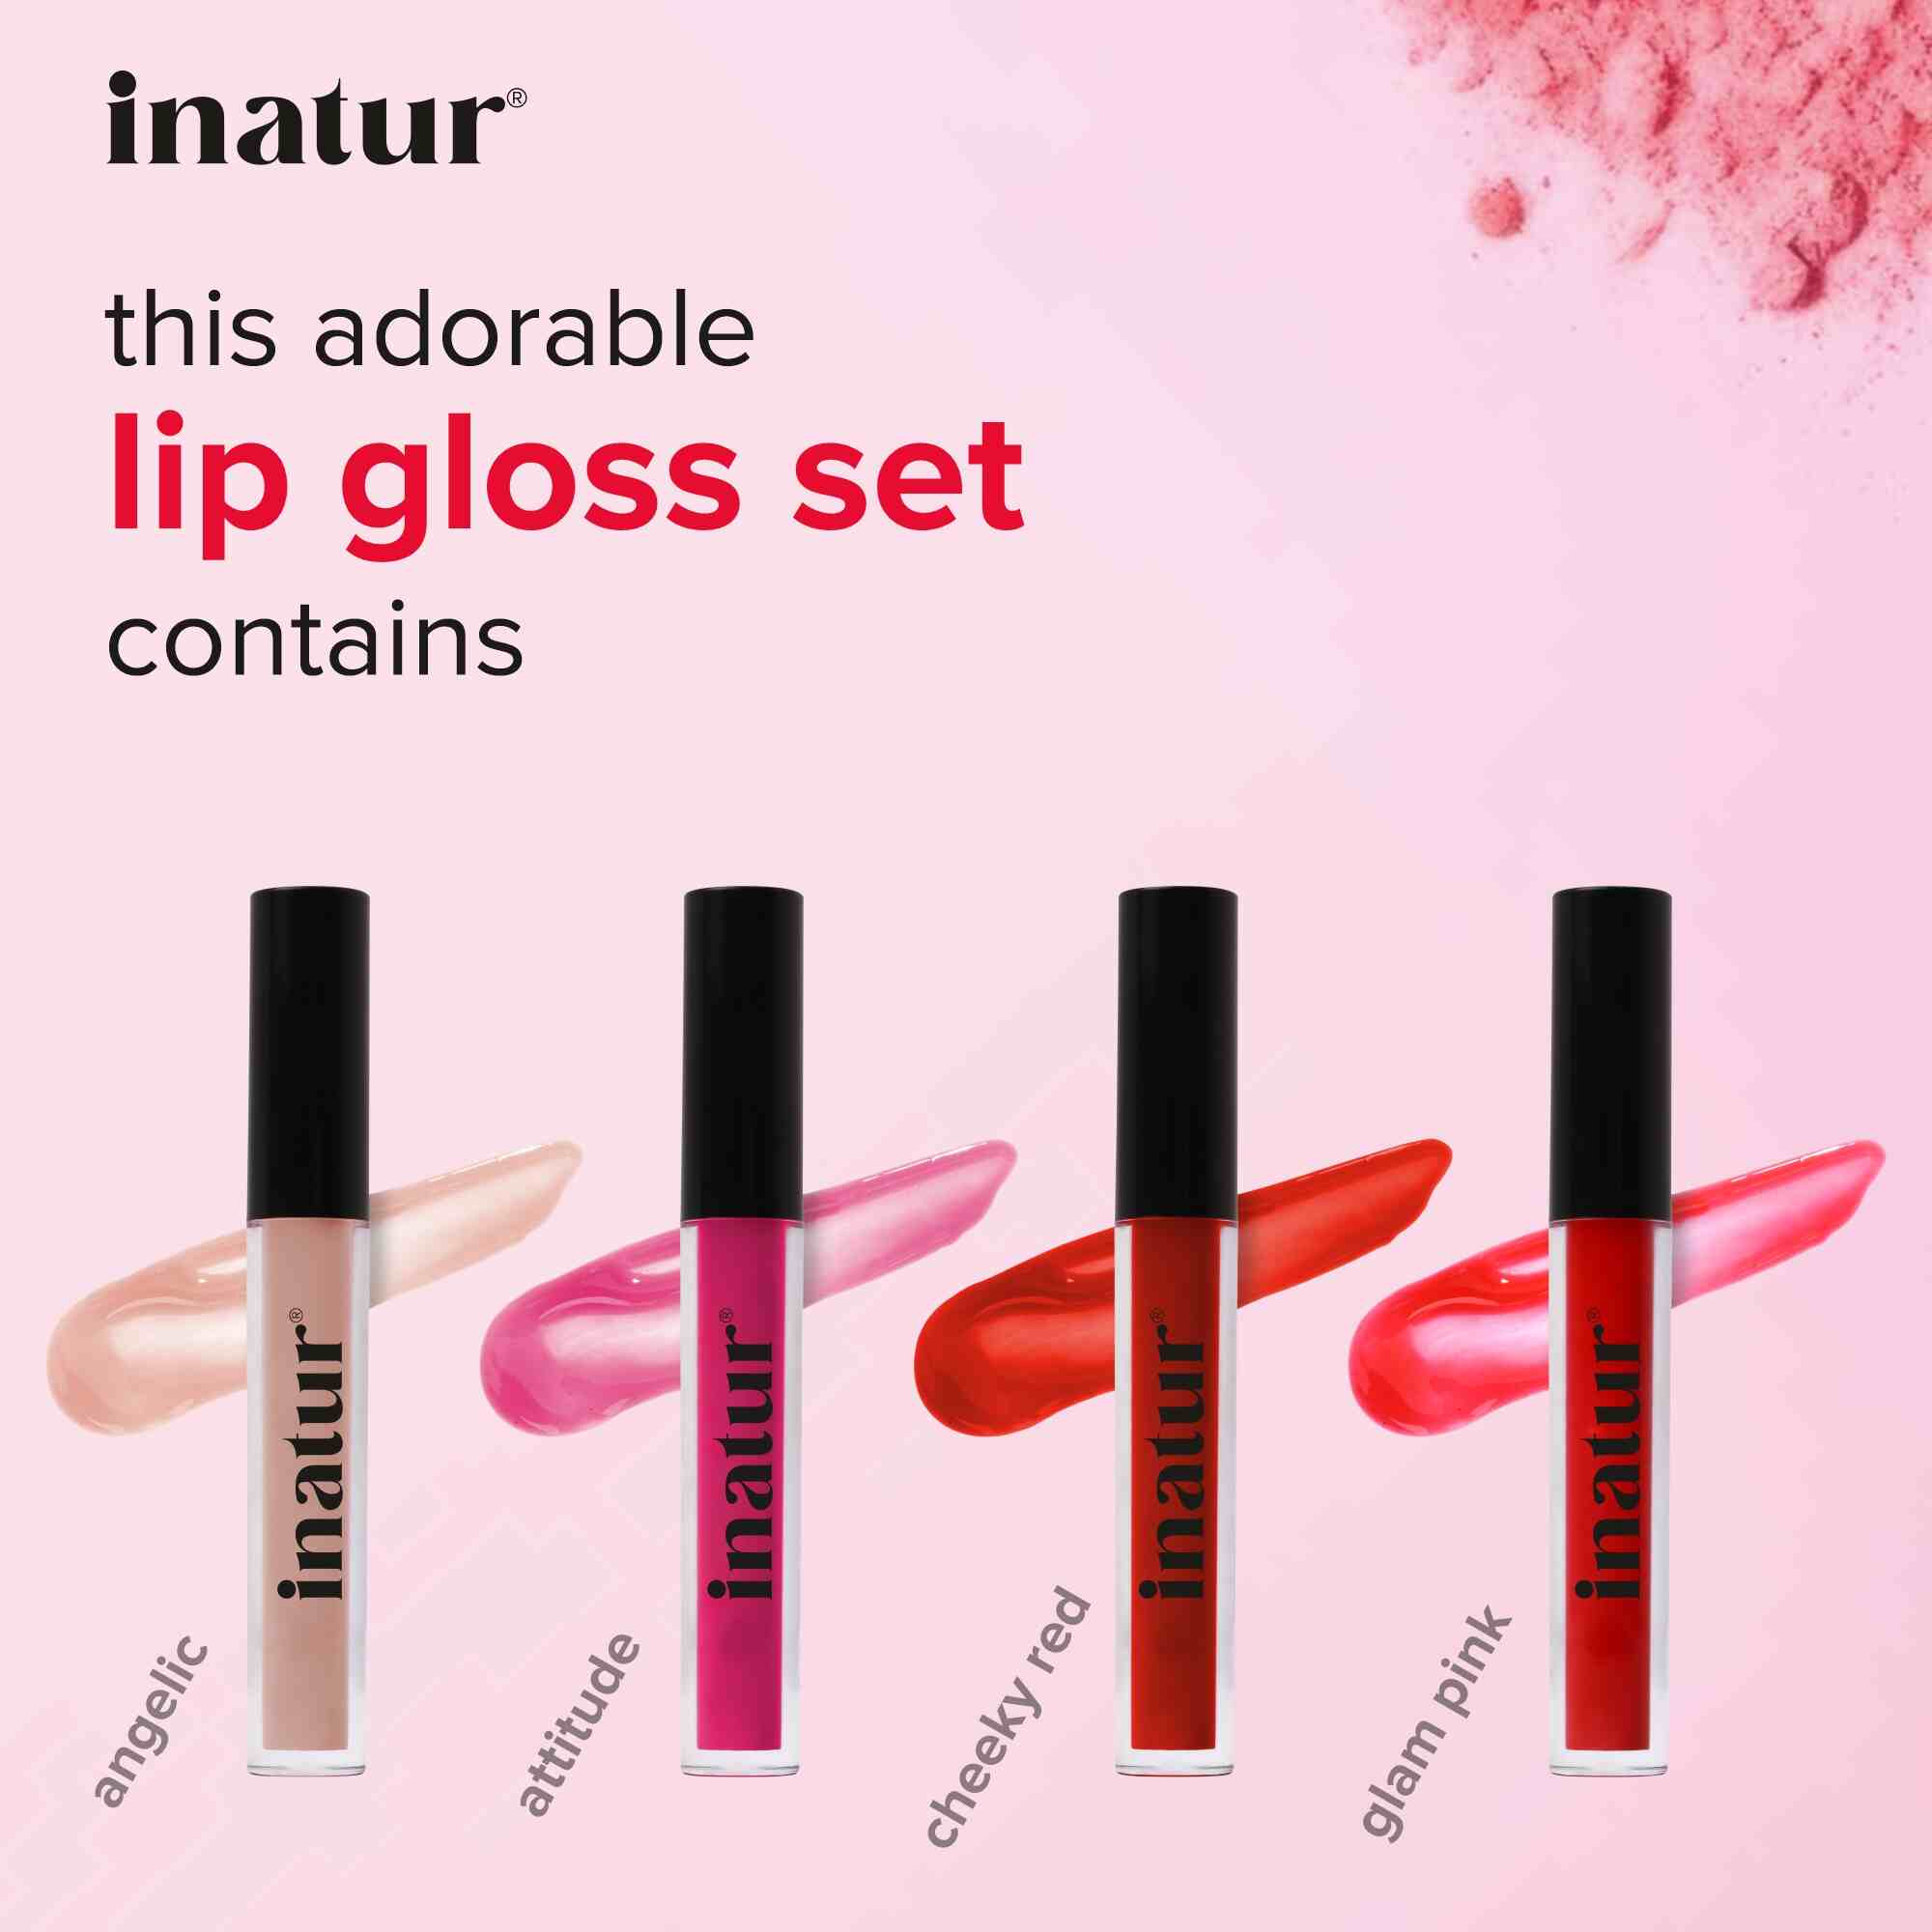 inatur lip gloss gift box contains